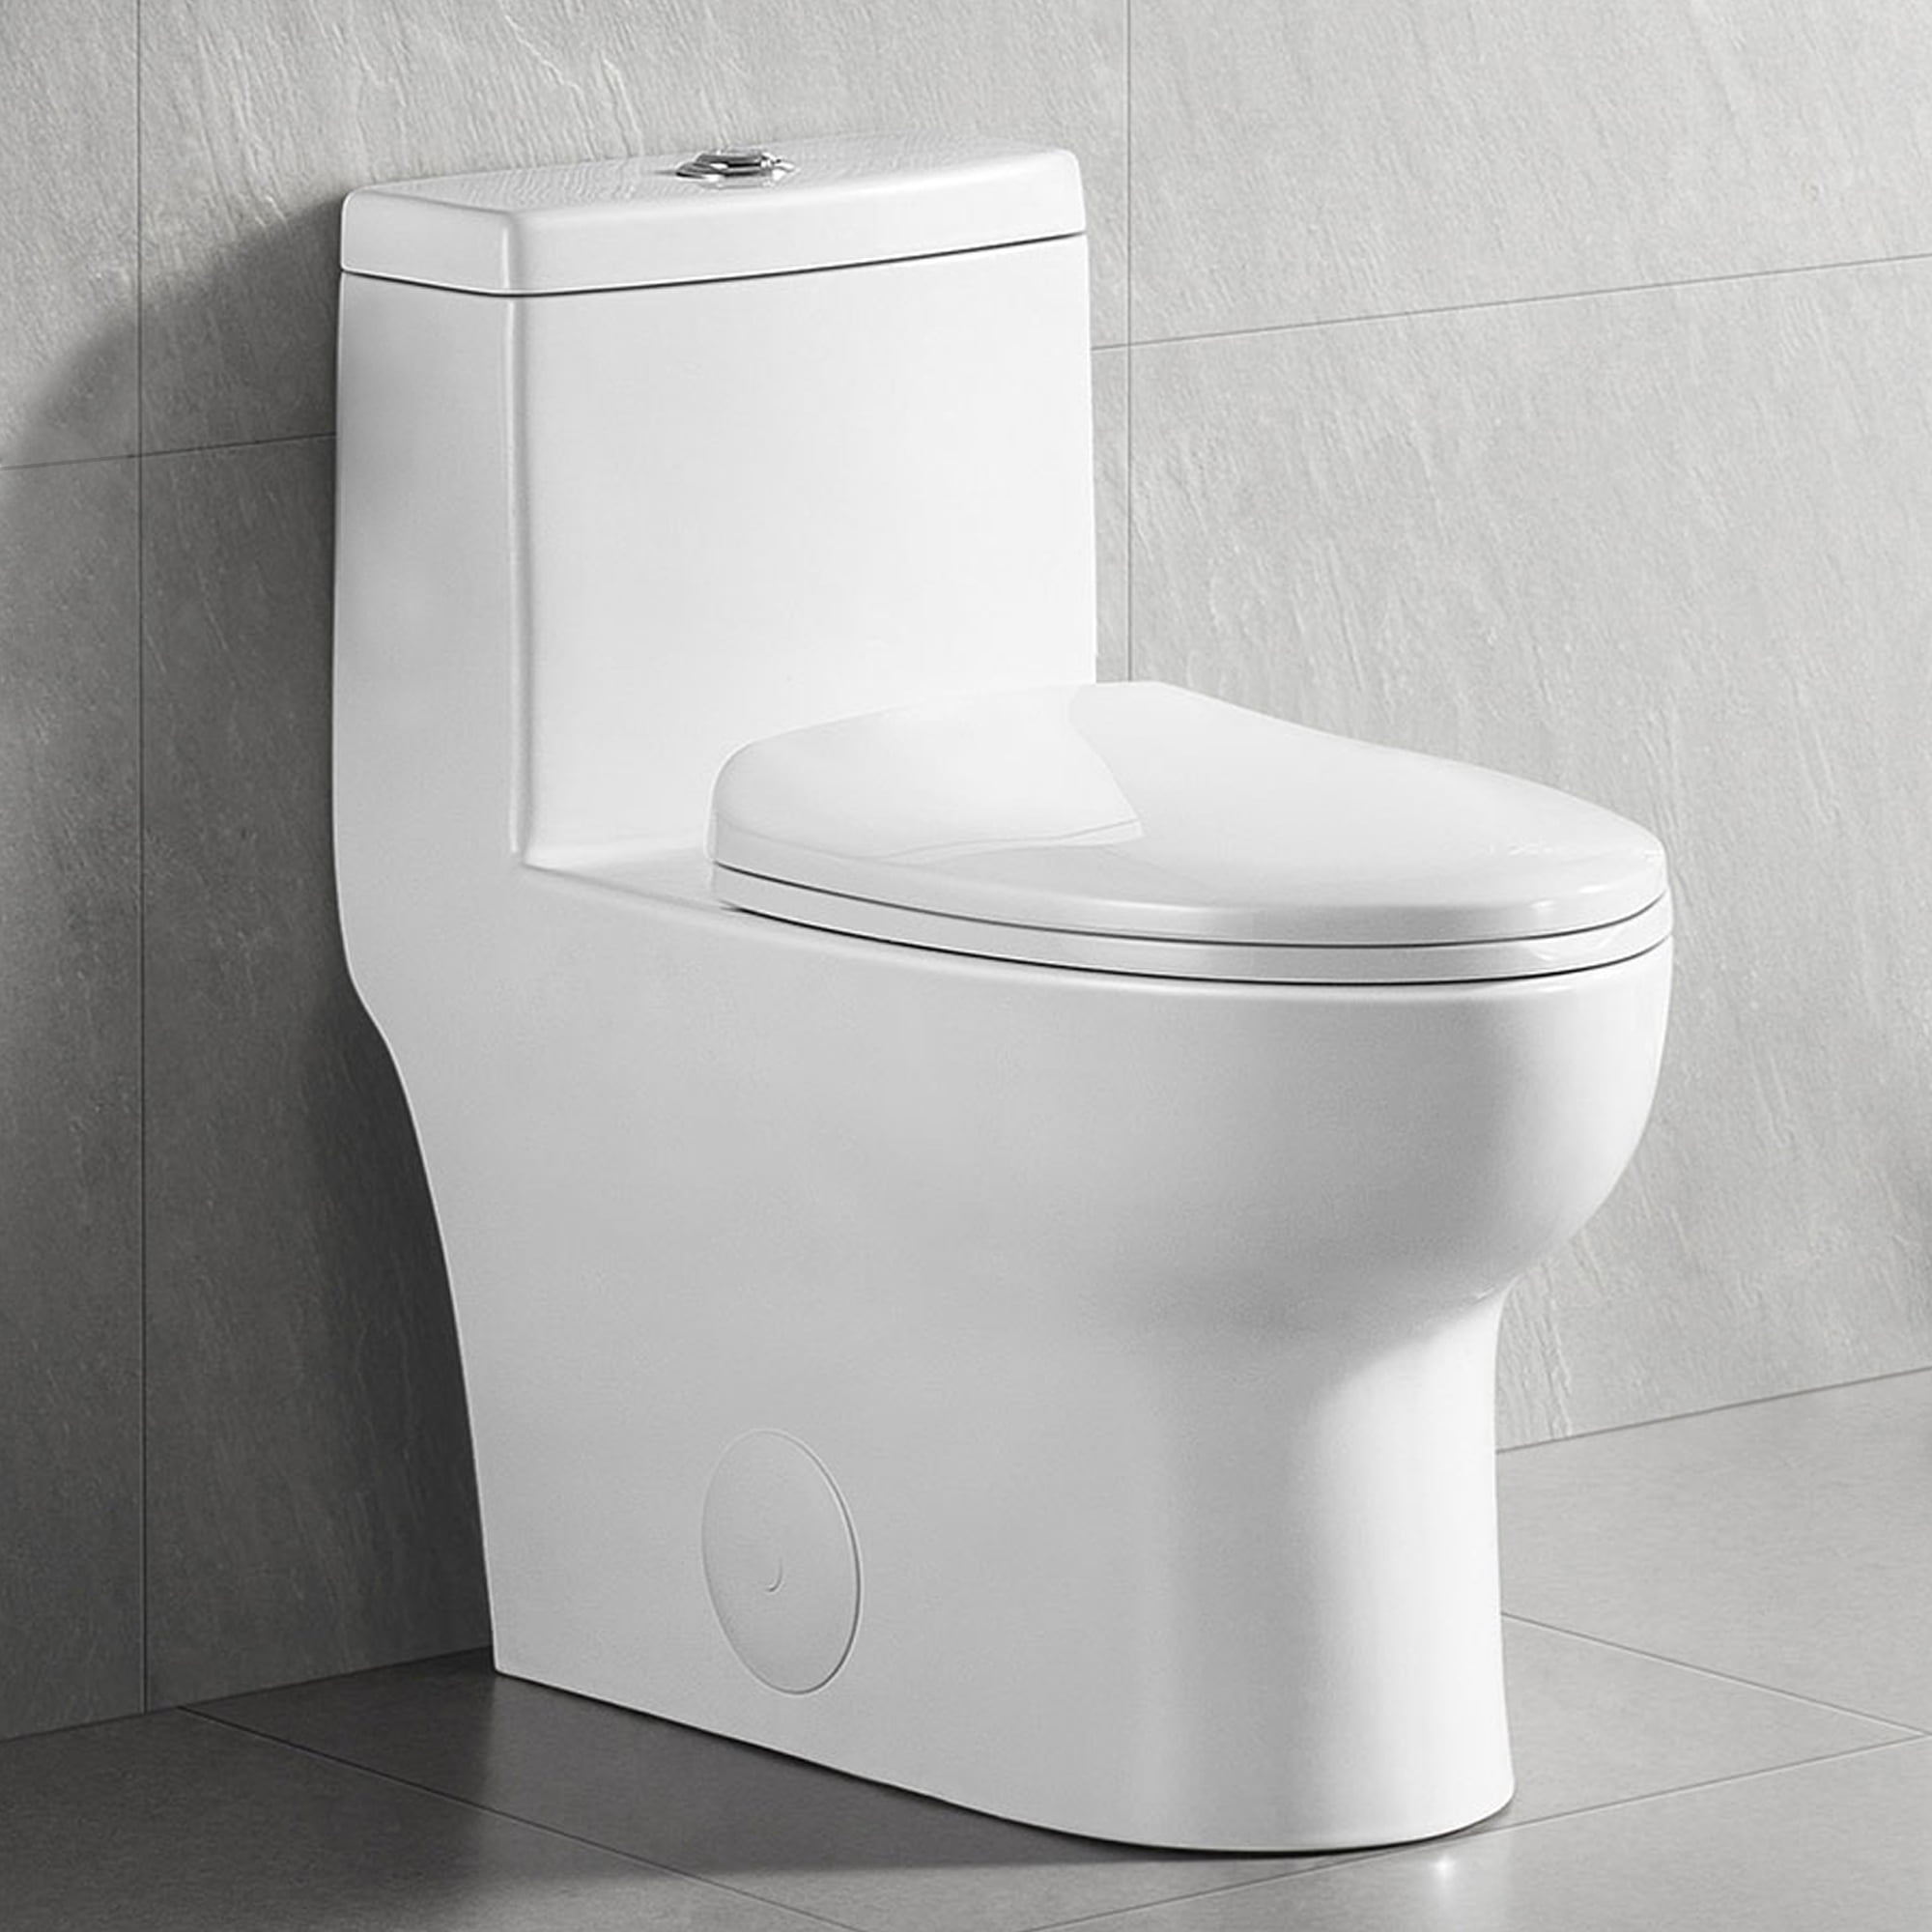 DeerValley Dual-Flush Elongated One-Piece Porcelain Toilet w/ Soft Closing Seat 